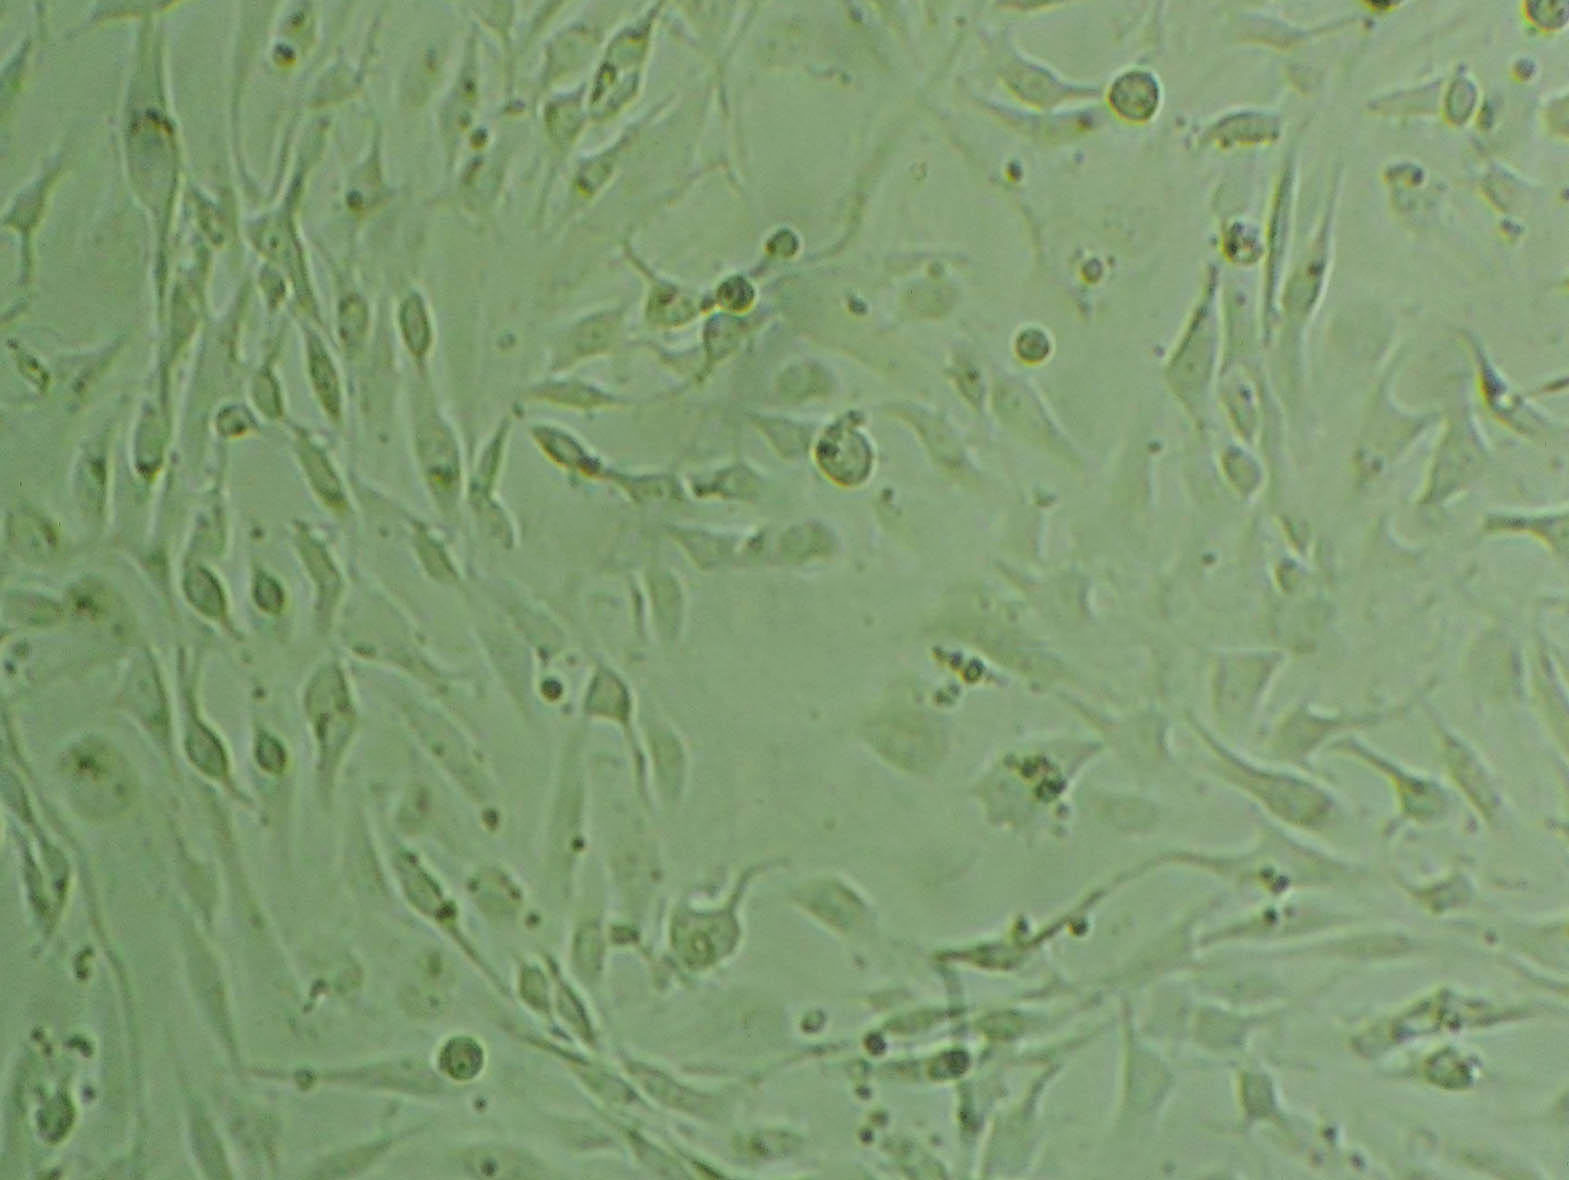 B104 [Rat neuroblastoma] Cell|大鼠神经母细胞瘤细胞,B104 [Rat neuroblastoma] Cell